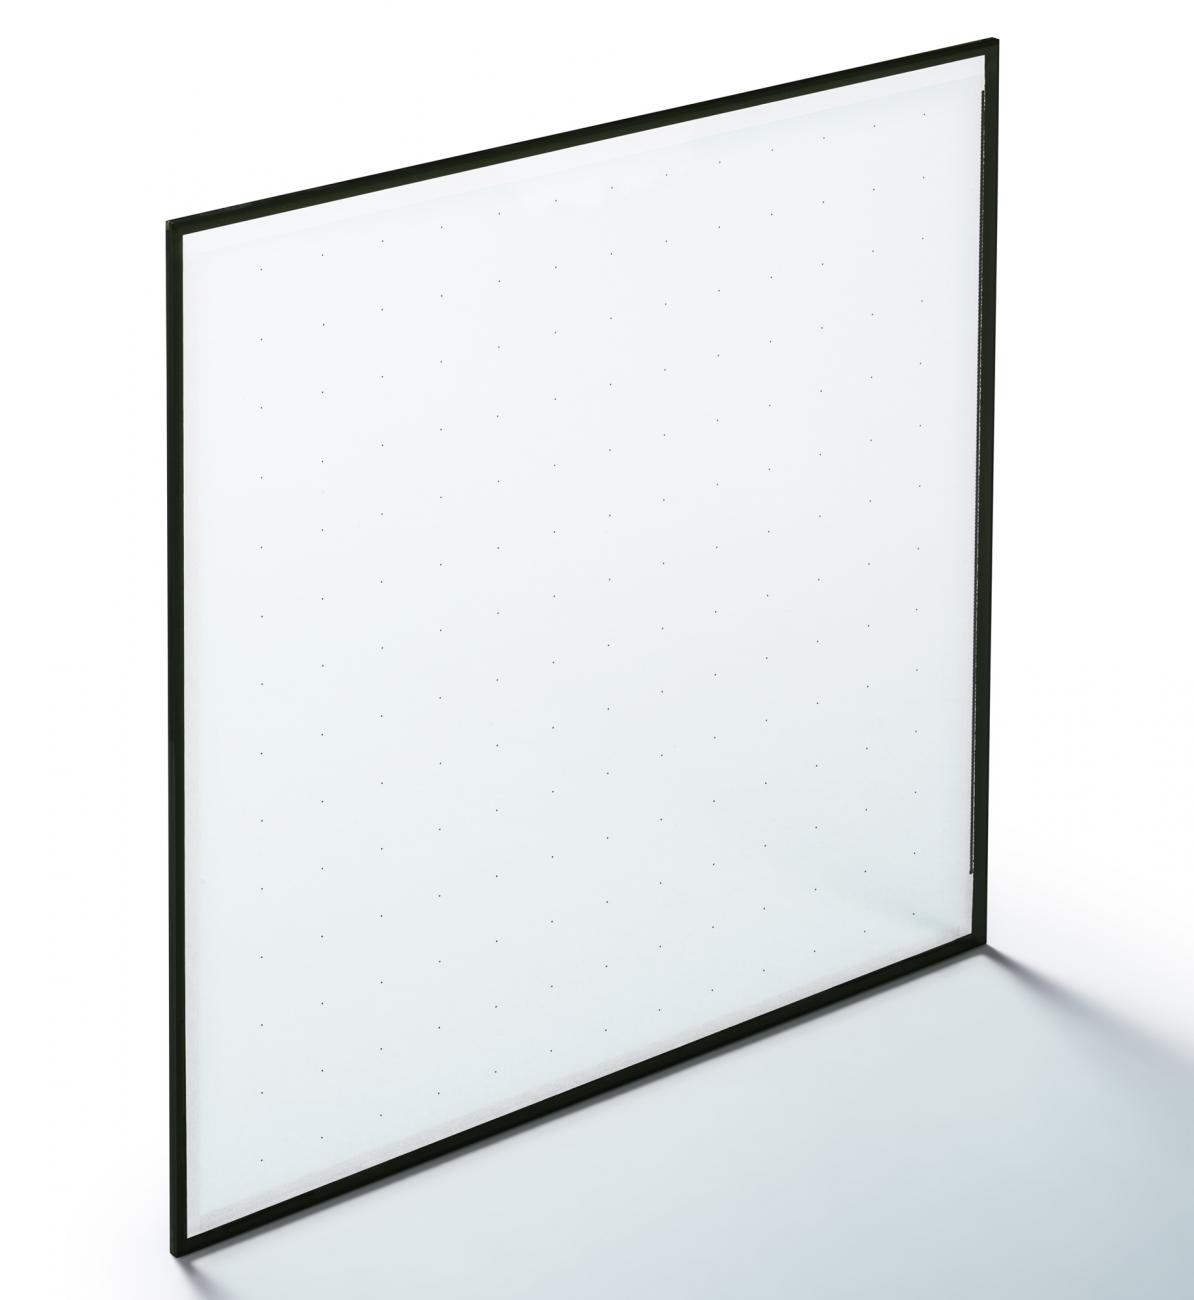 Fineo Hybrid: - Vacuum insulating glass versus triple insulating glass